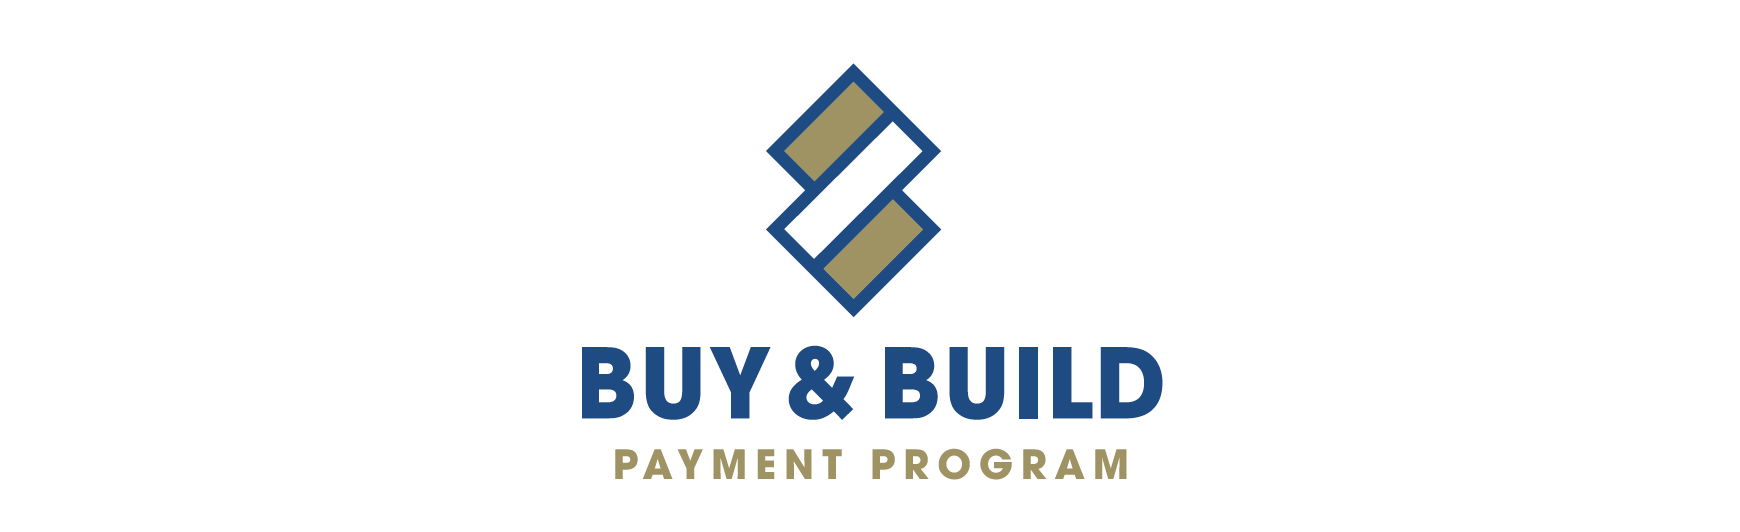 Buy & Build Payment Program Logo